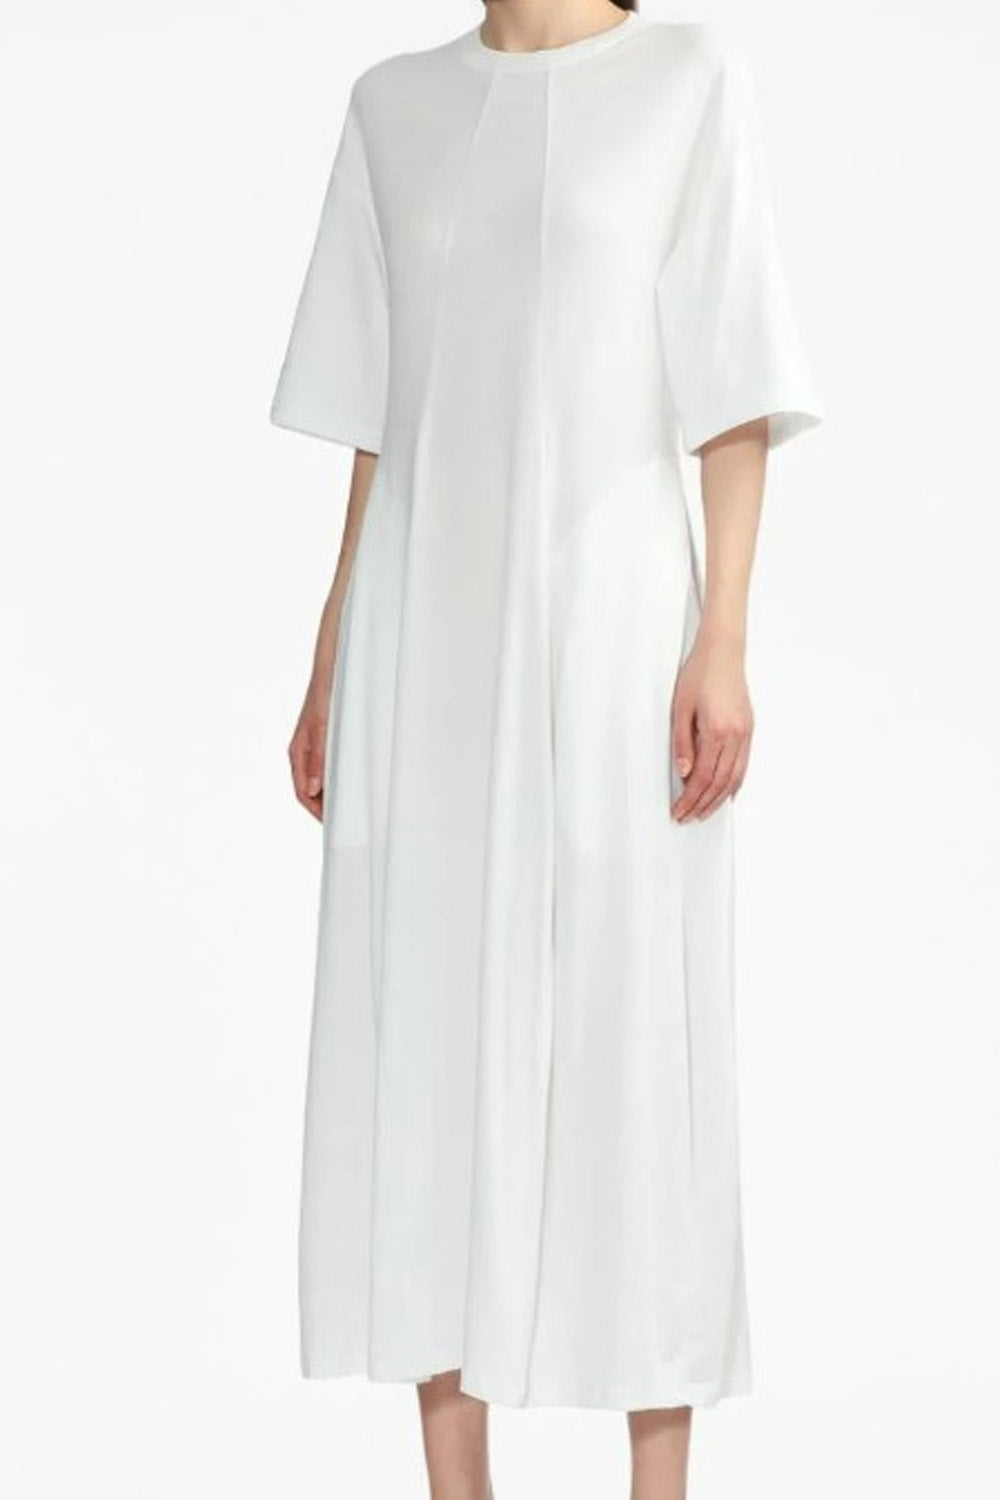 Thyme White Dress